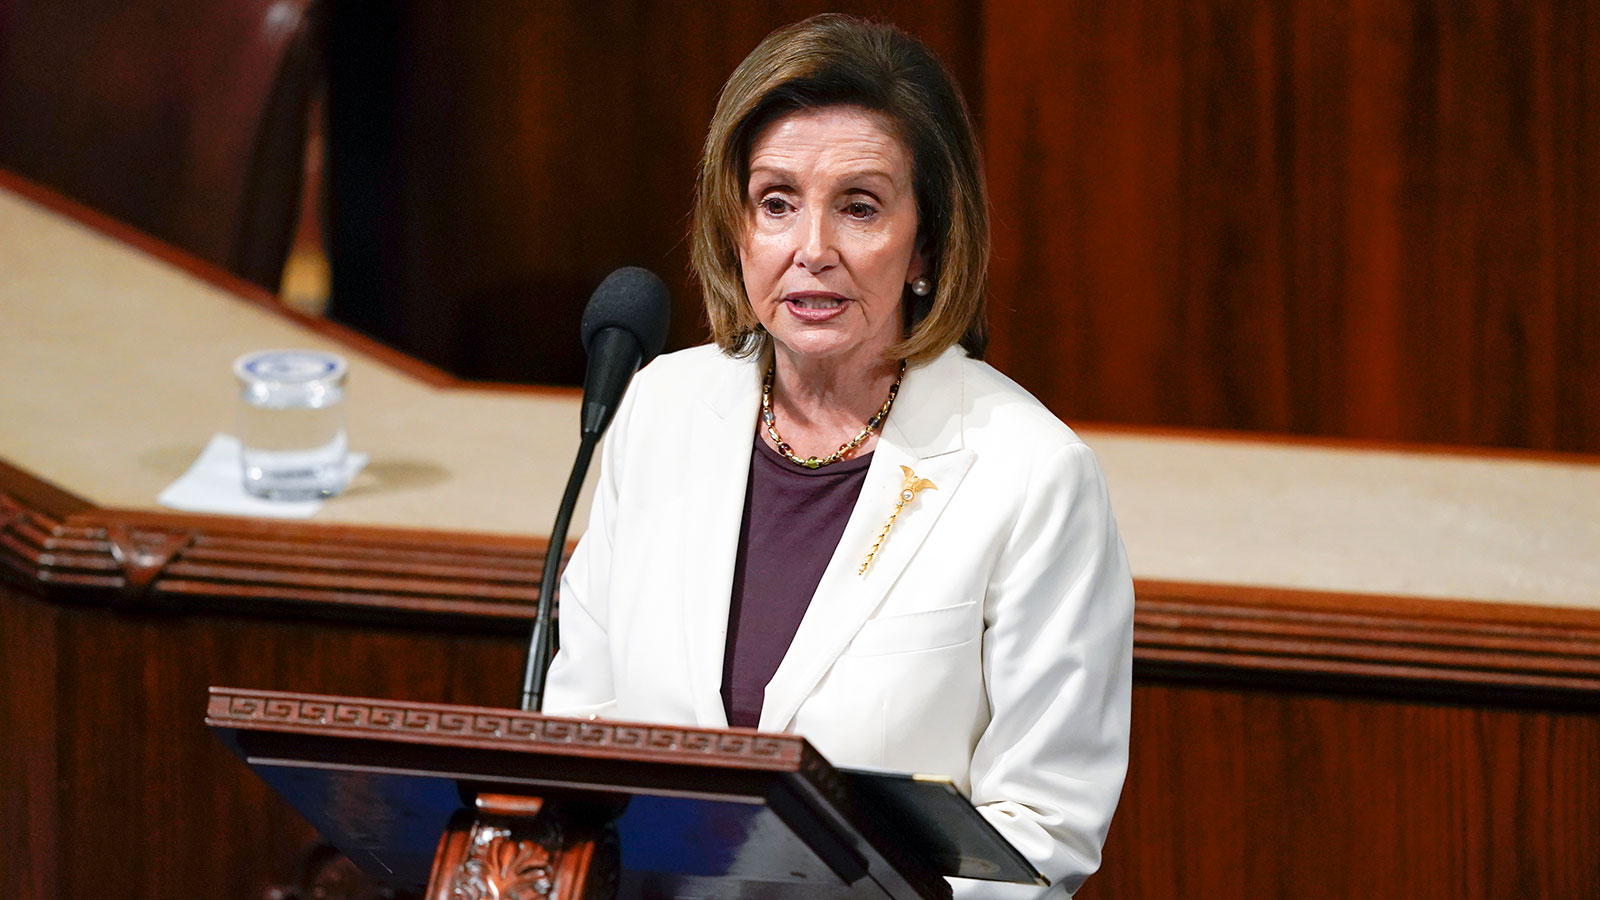 House Speaker Nancy Pelosi says she will not run for a future leadership post